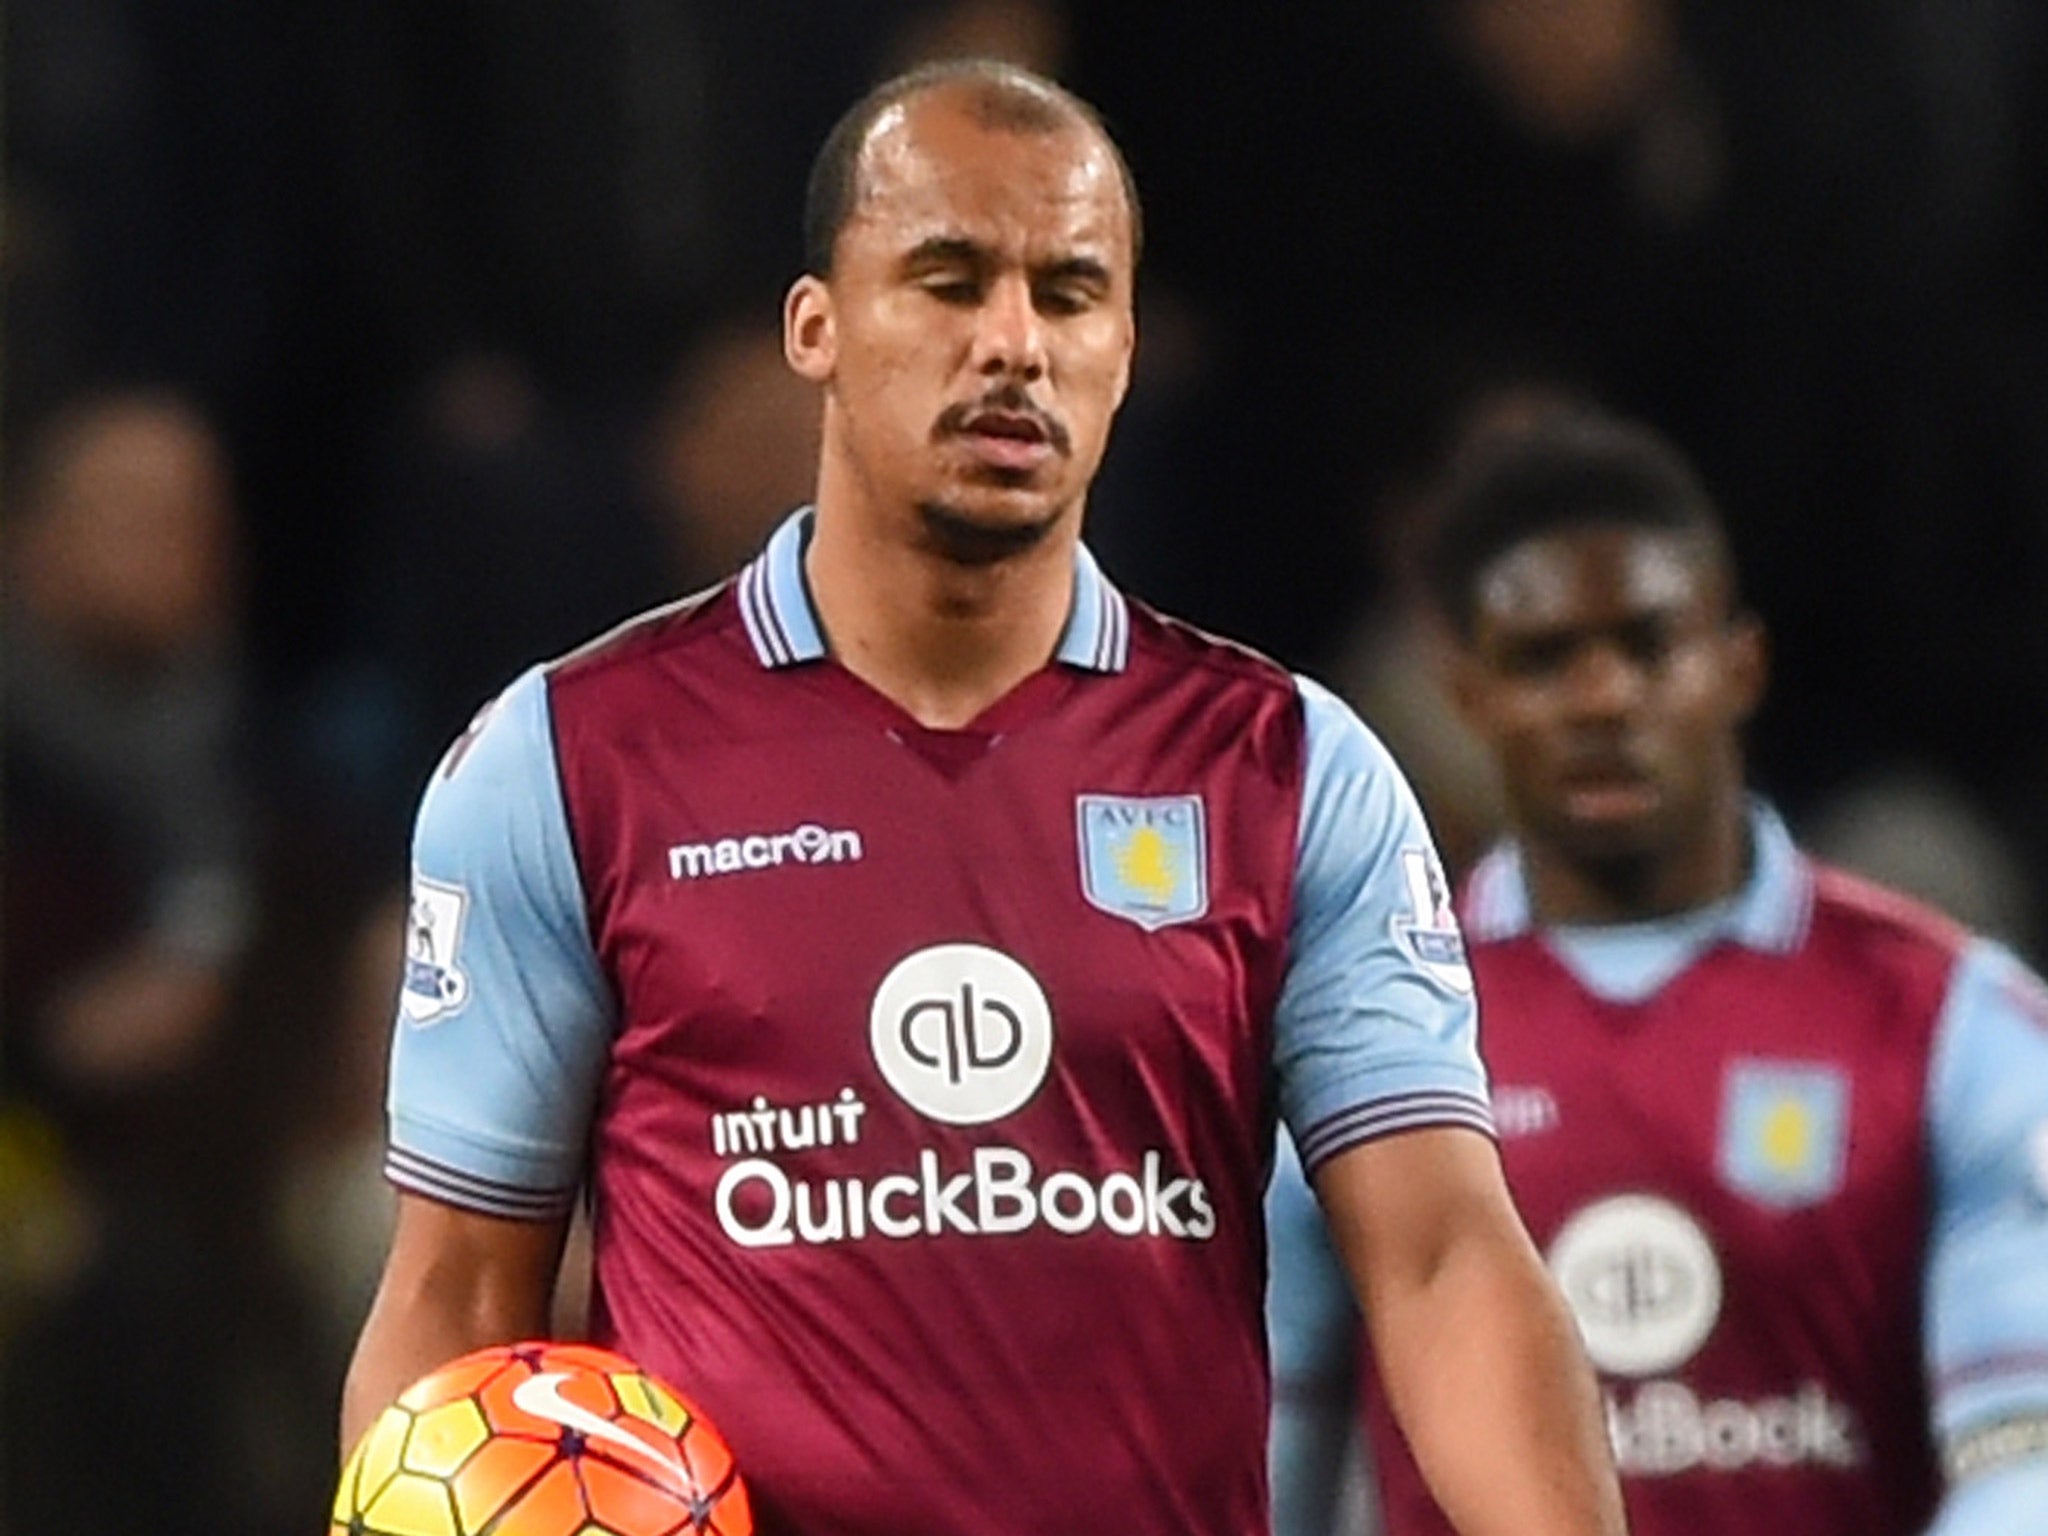 Gabriel Agbonlahor has been suspended by Aston Villa